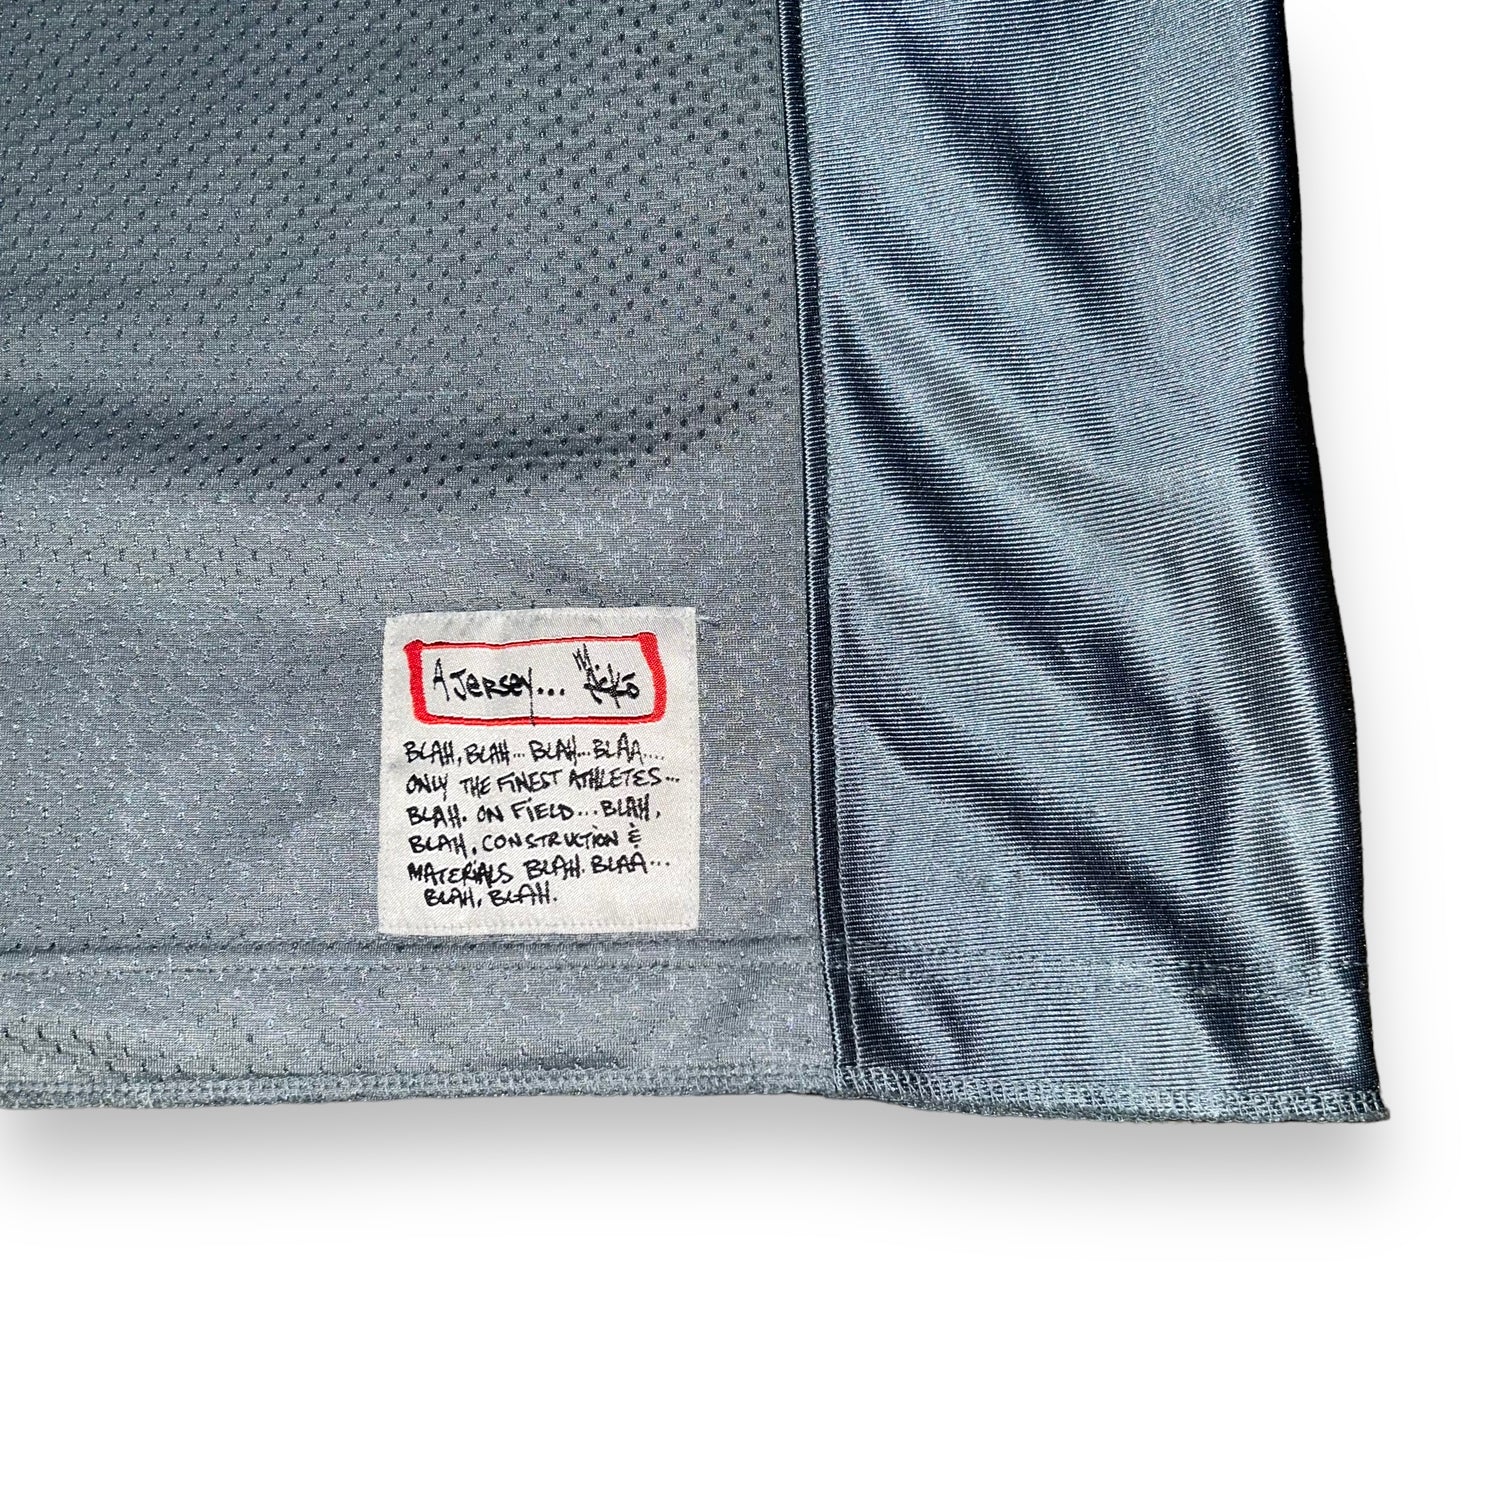 Ecko Unlimited Vintage Jersey (XL)